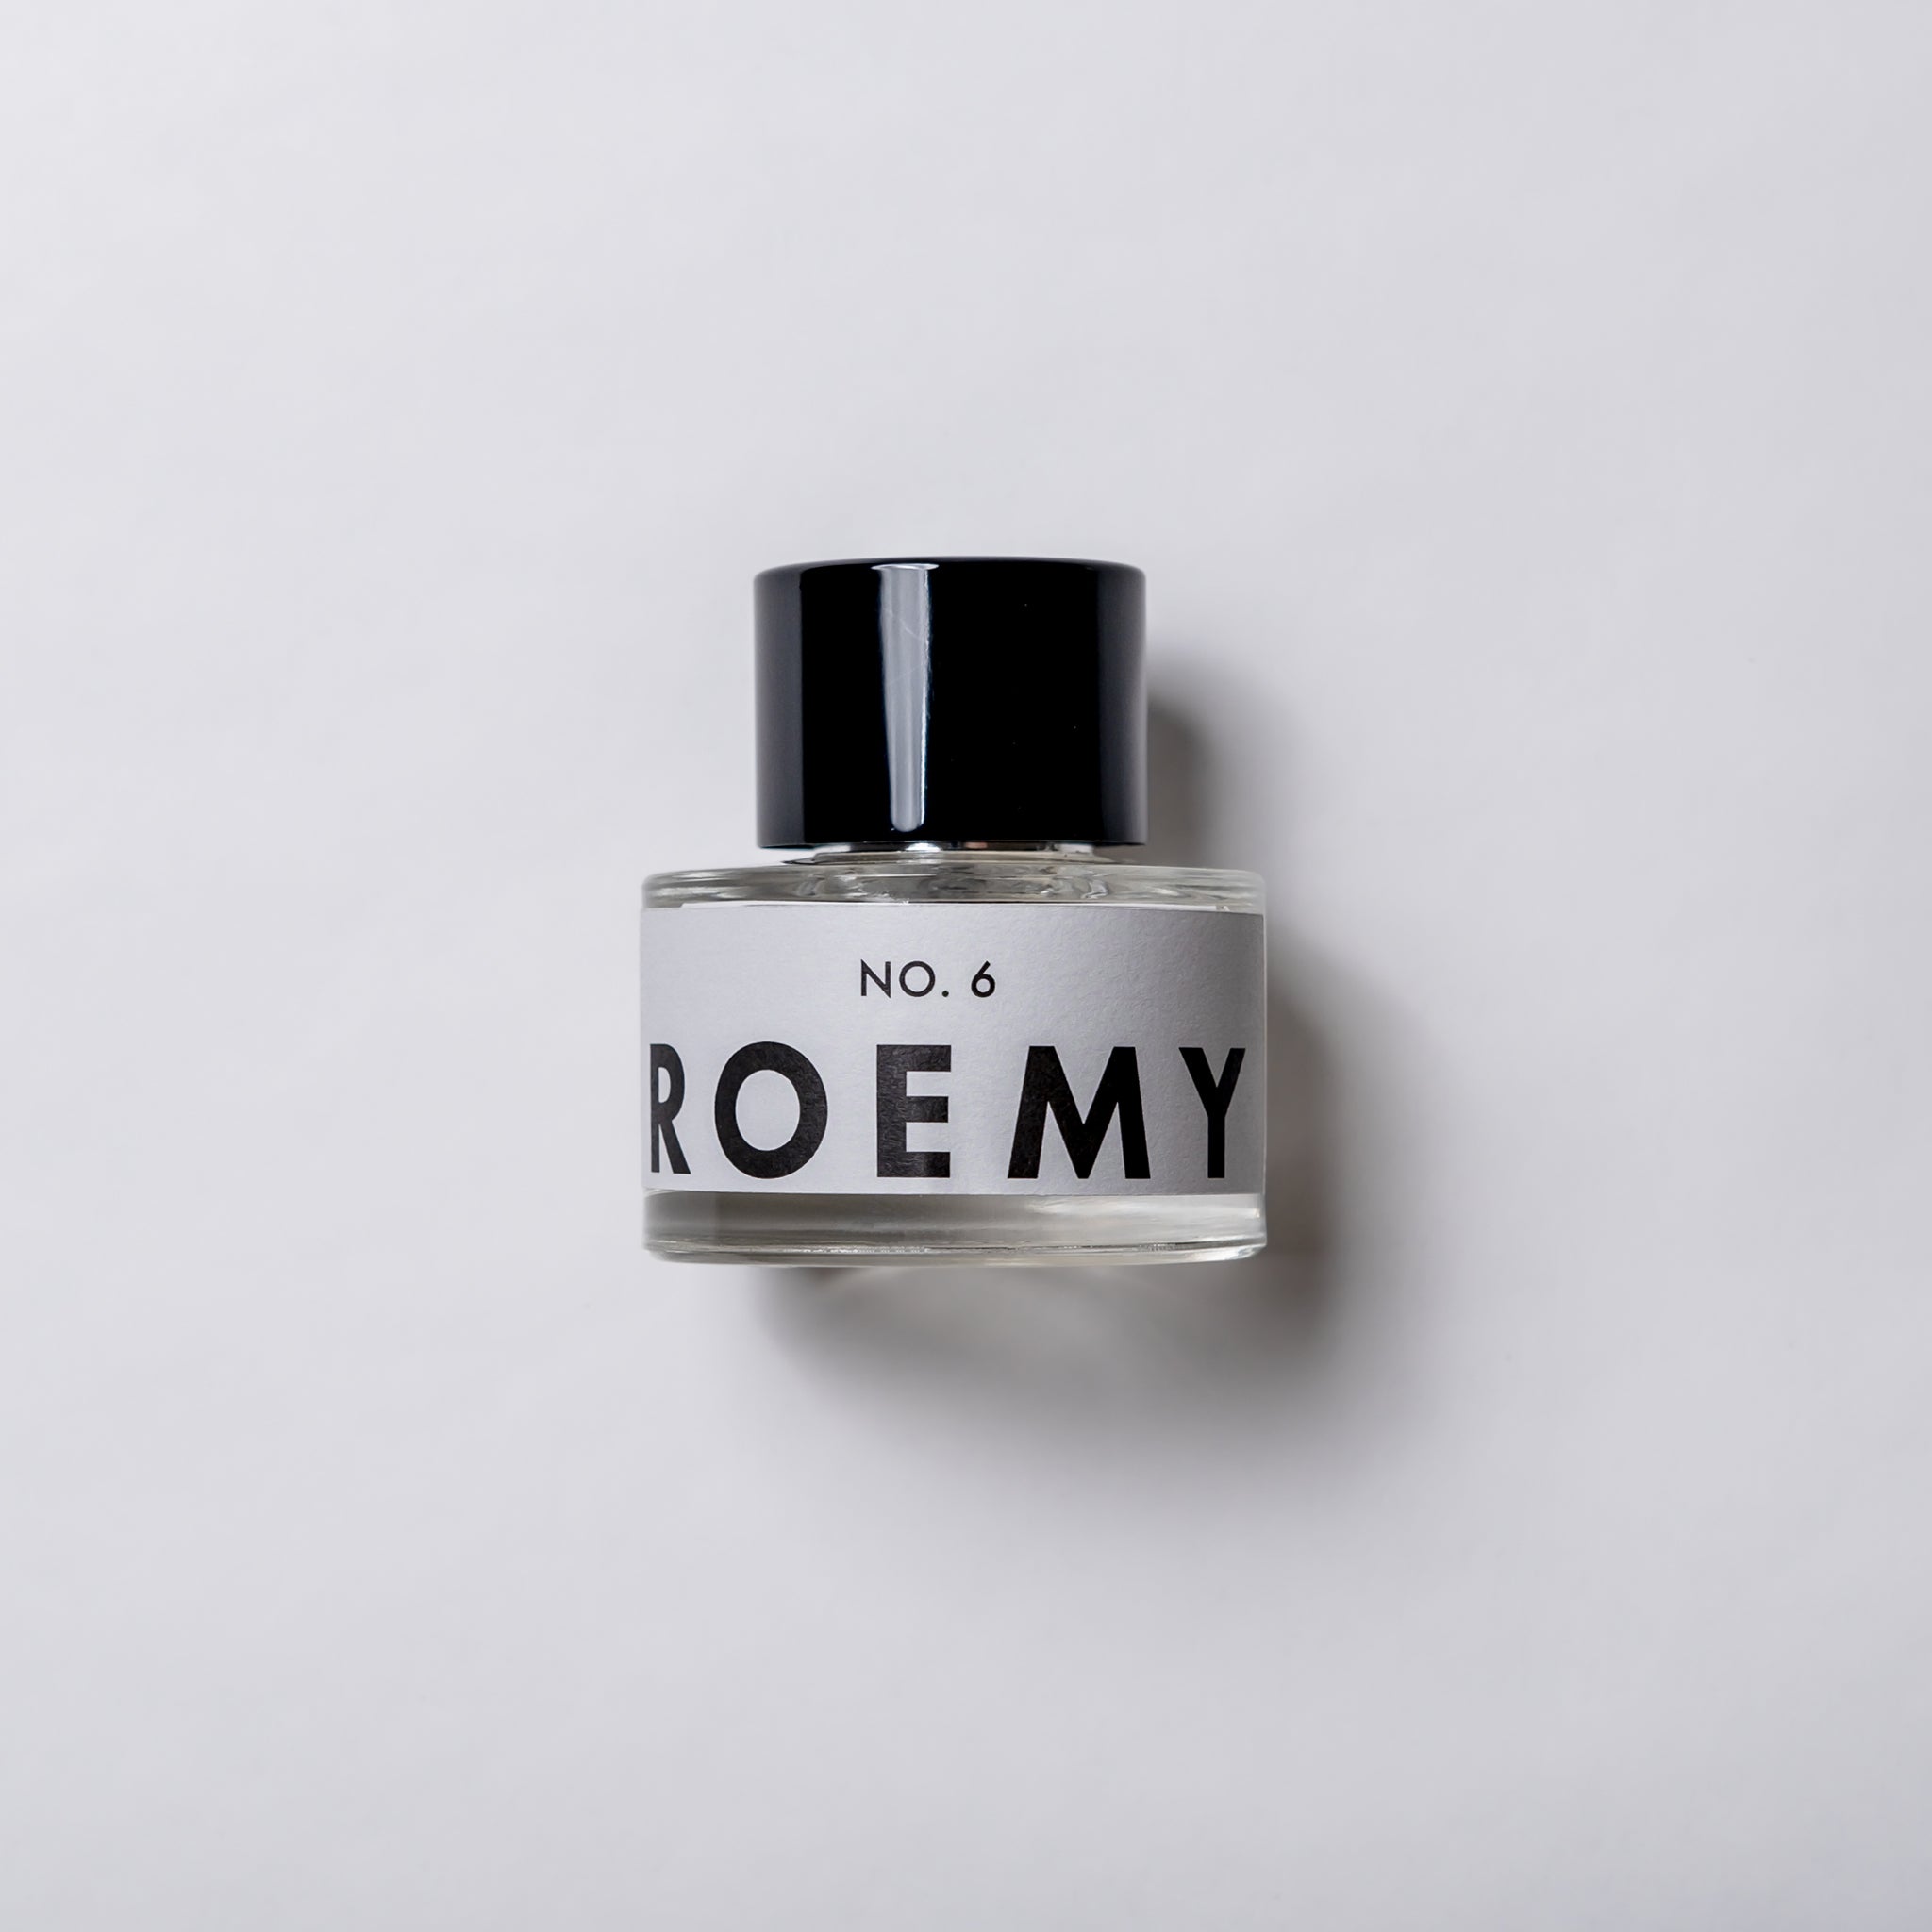 ROEMY No. 6 55mL Parfum - top down